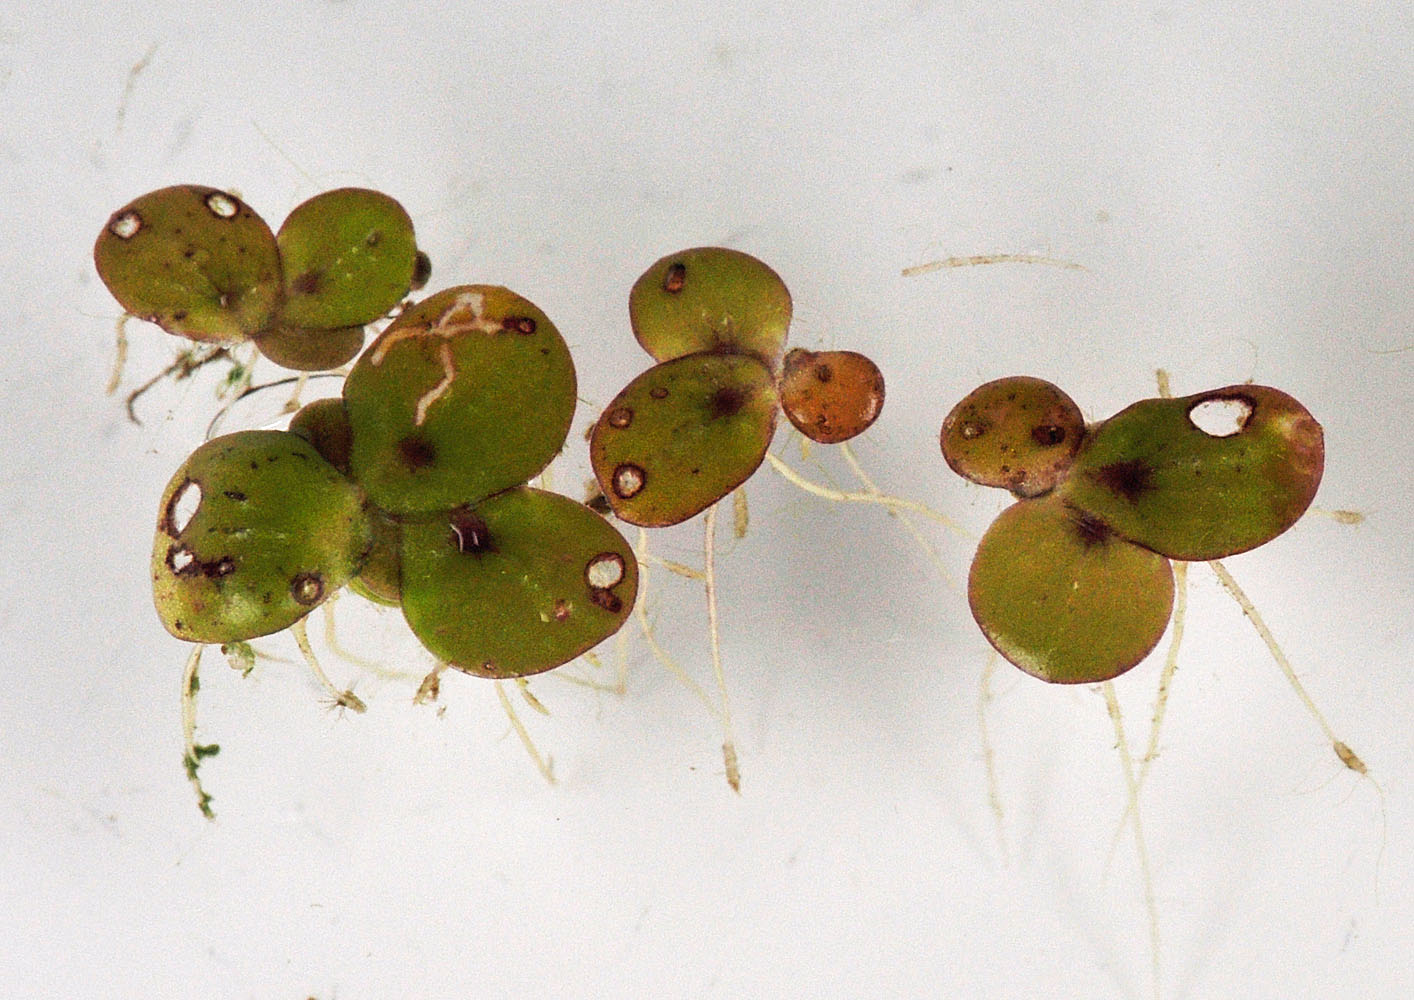 Flora of Eastern Washington Image: Spirodela polyrrhiza